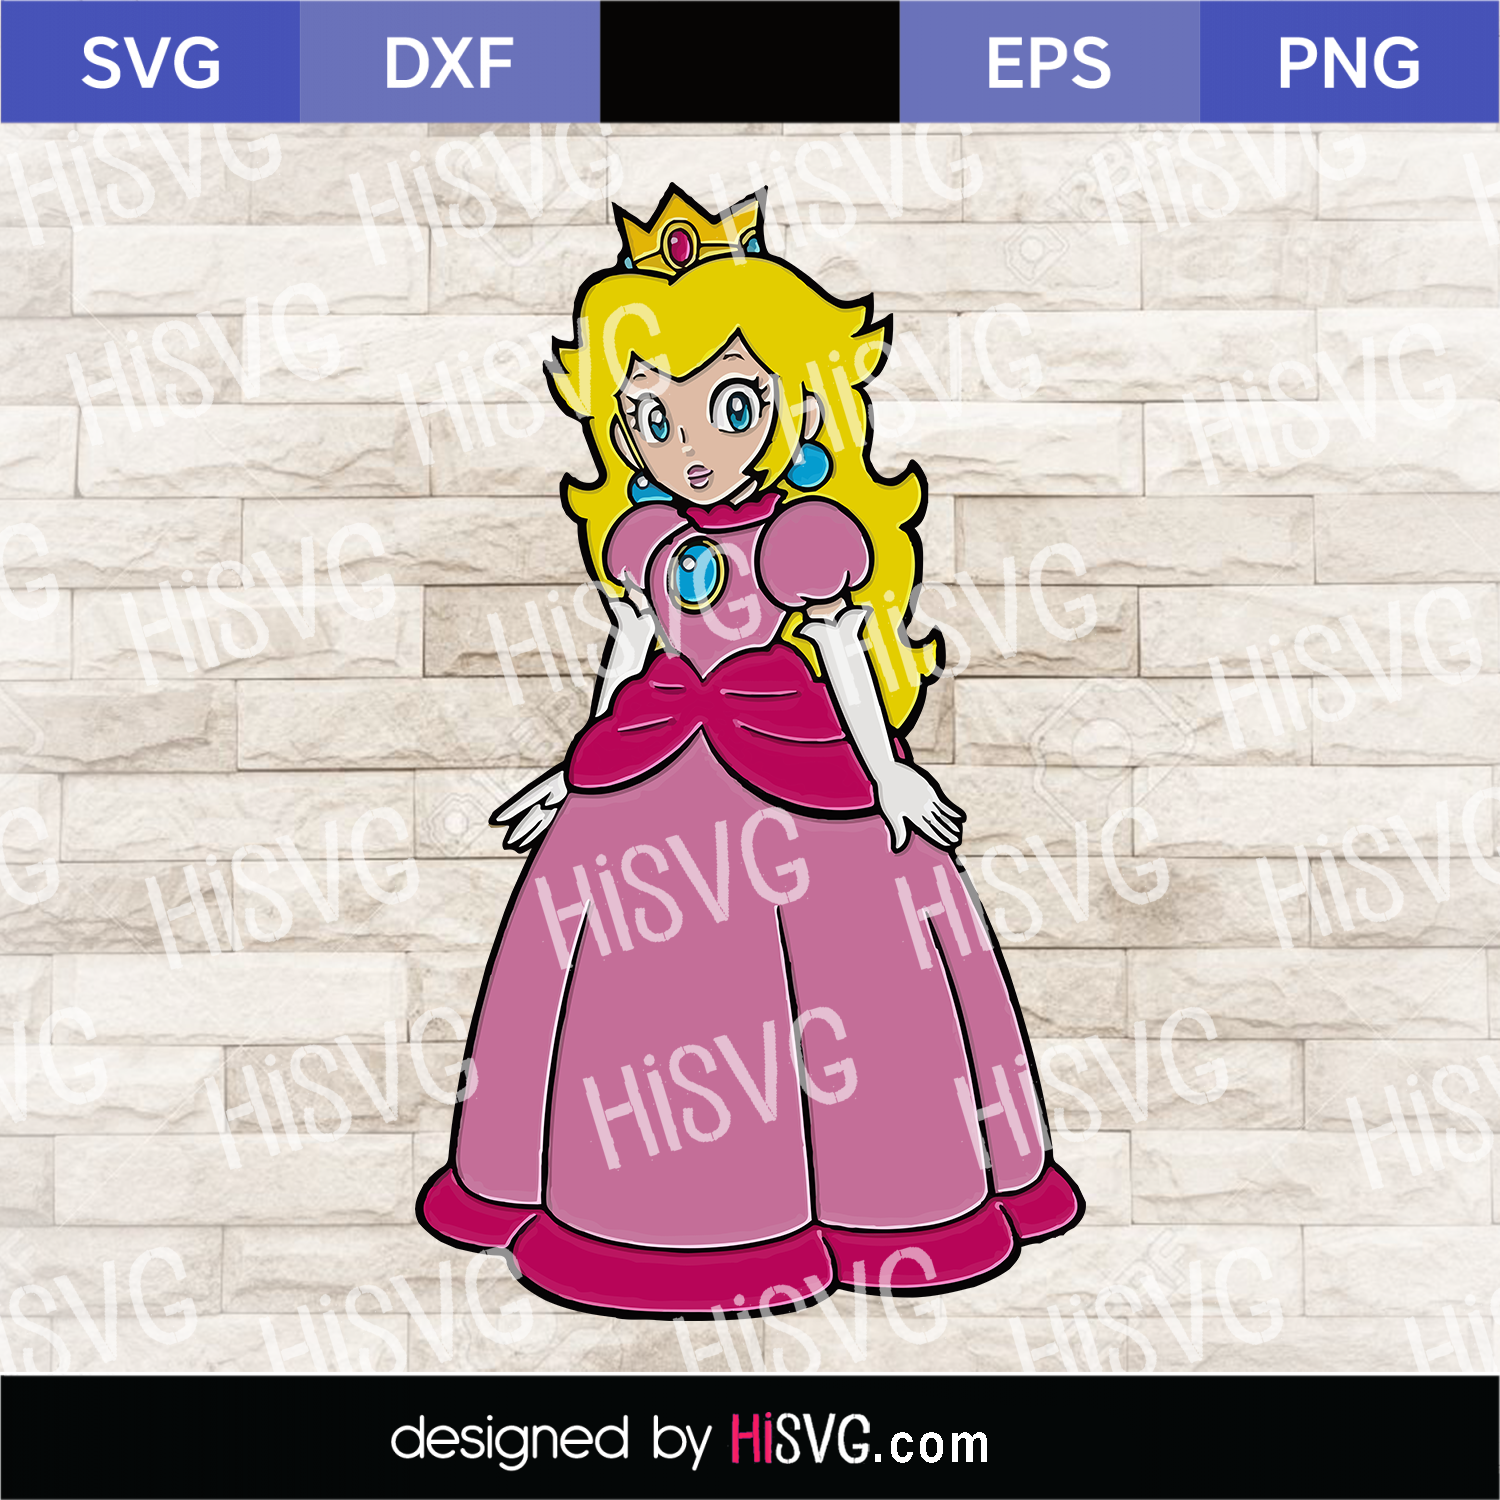 Download Princess Peach svg - Free SVG cut files | HiSVG.CoM - Free ...